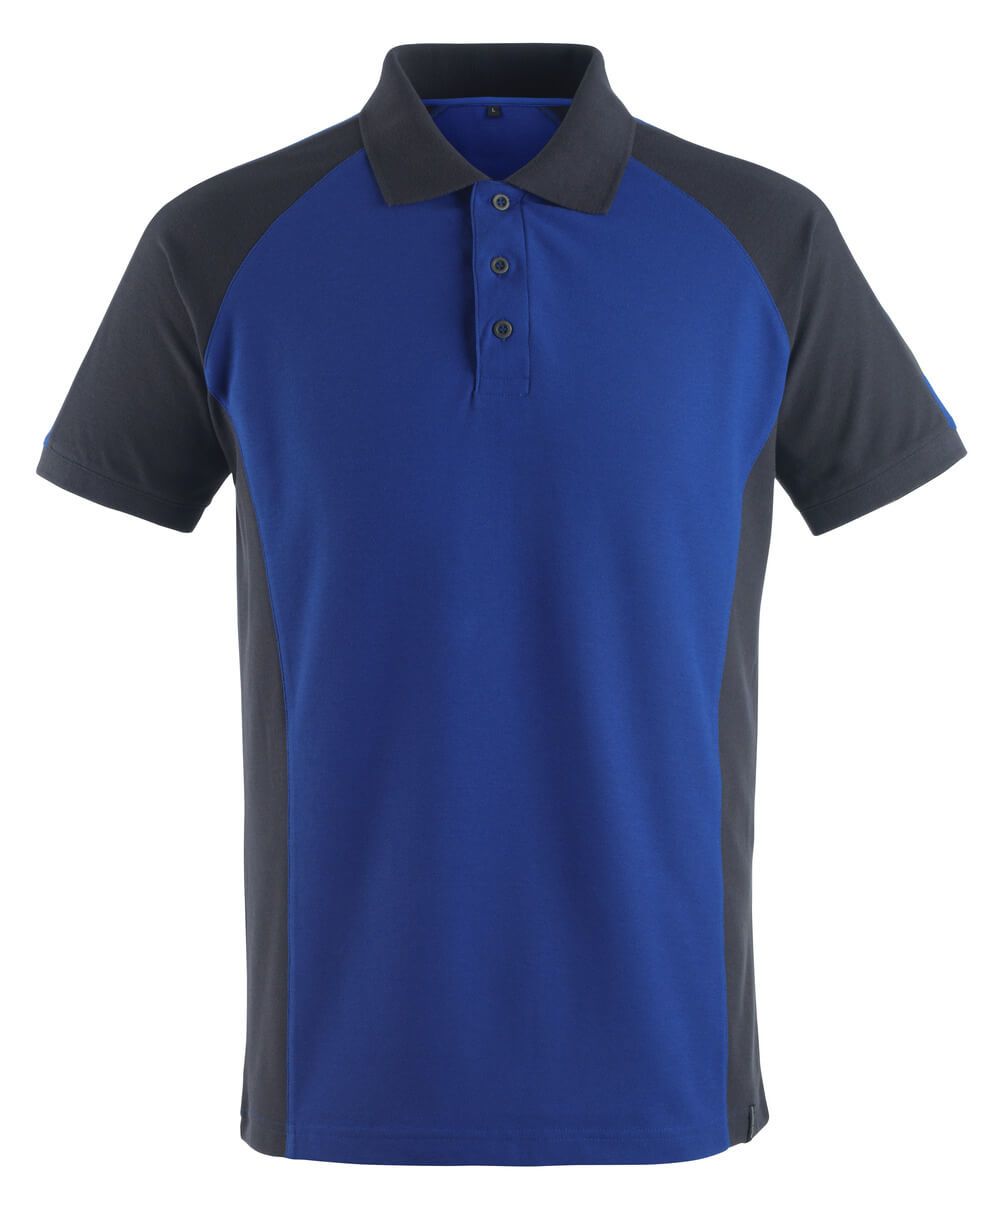 Mascot Workwear BOTTROP Blue, Dark Navy Cotton, Polyester Polo Shirt, UK- M, EUR- M